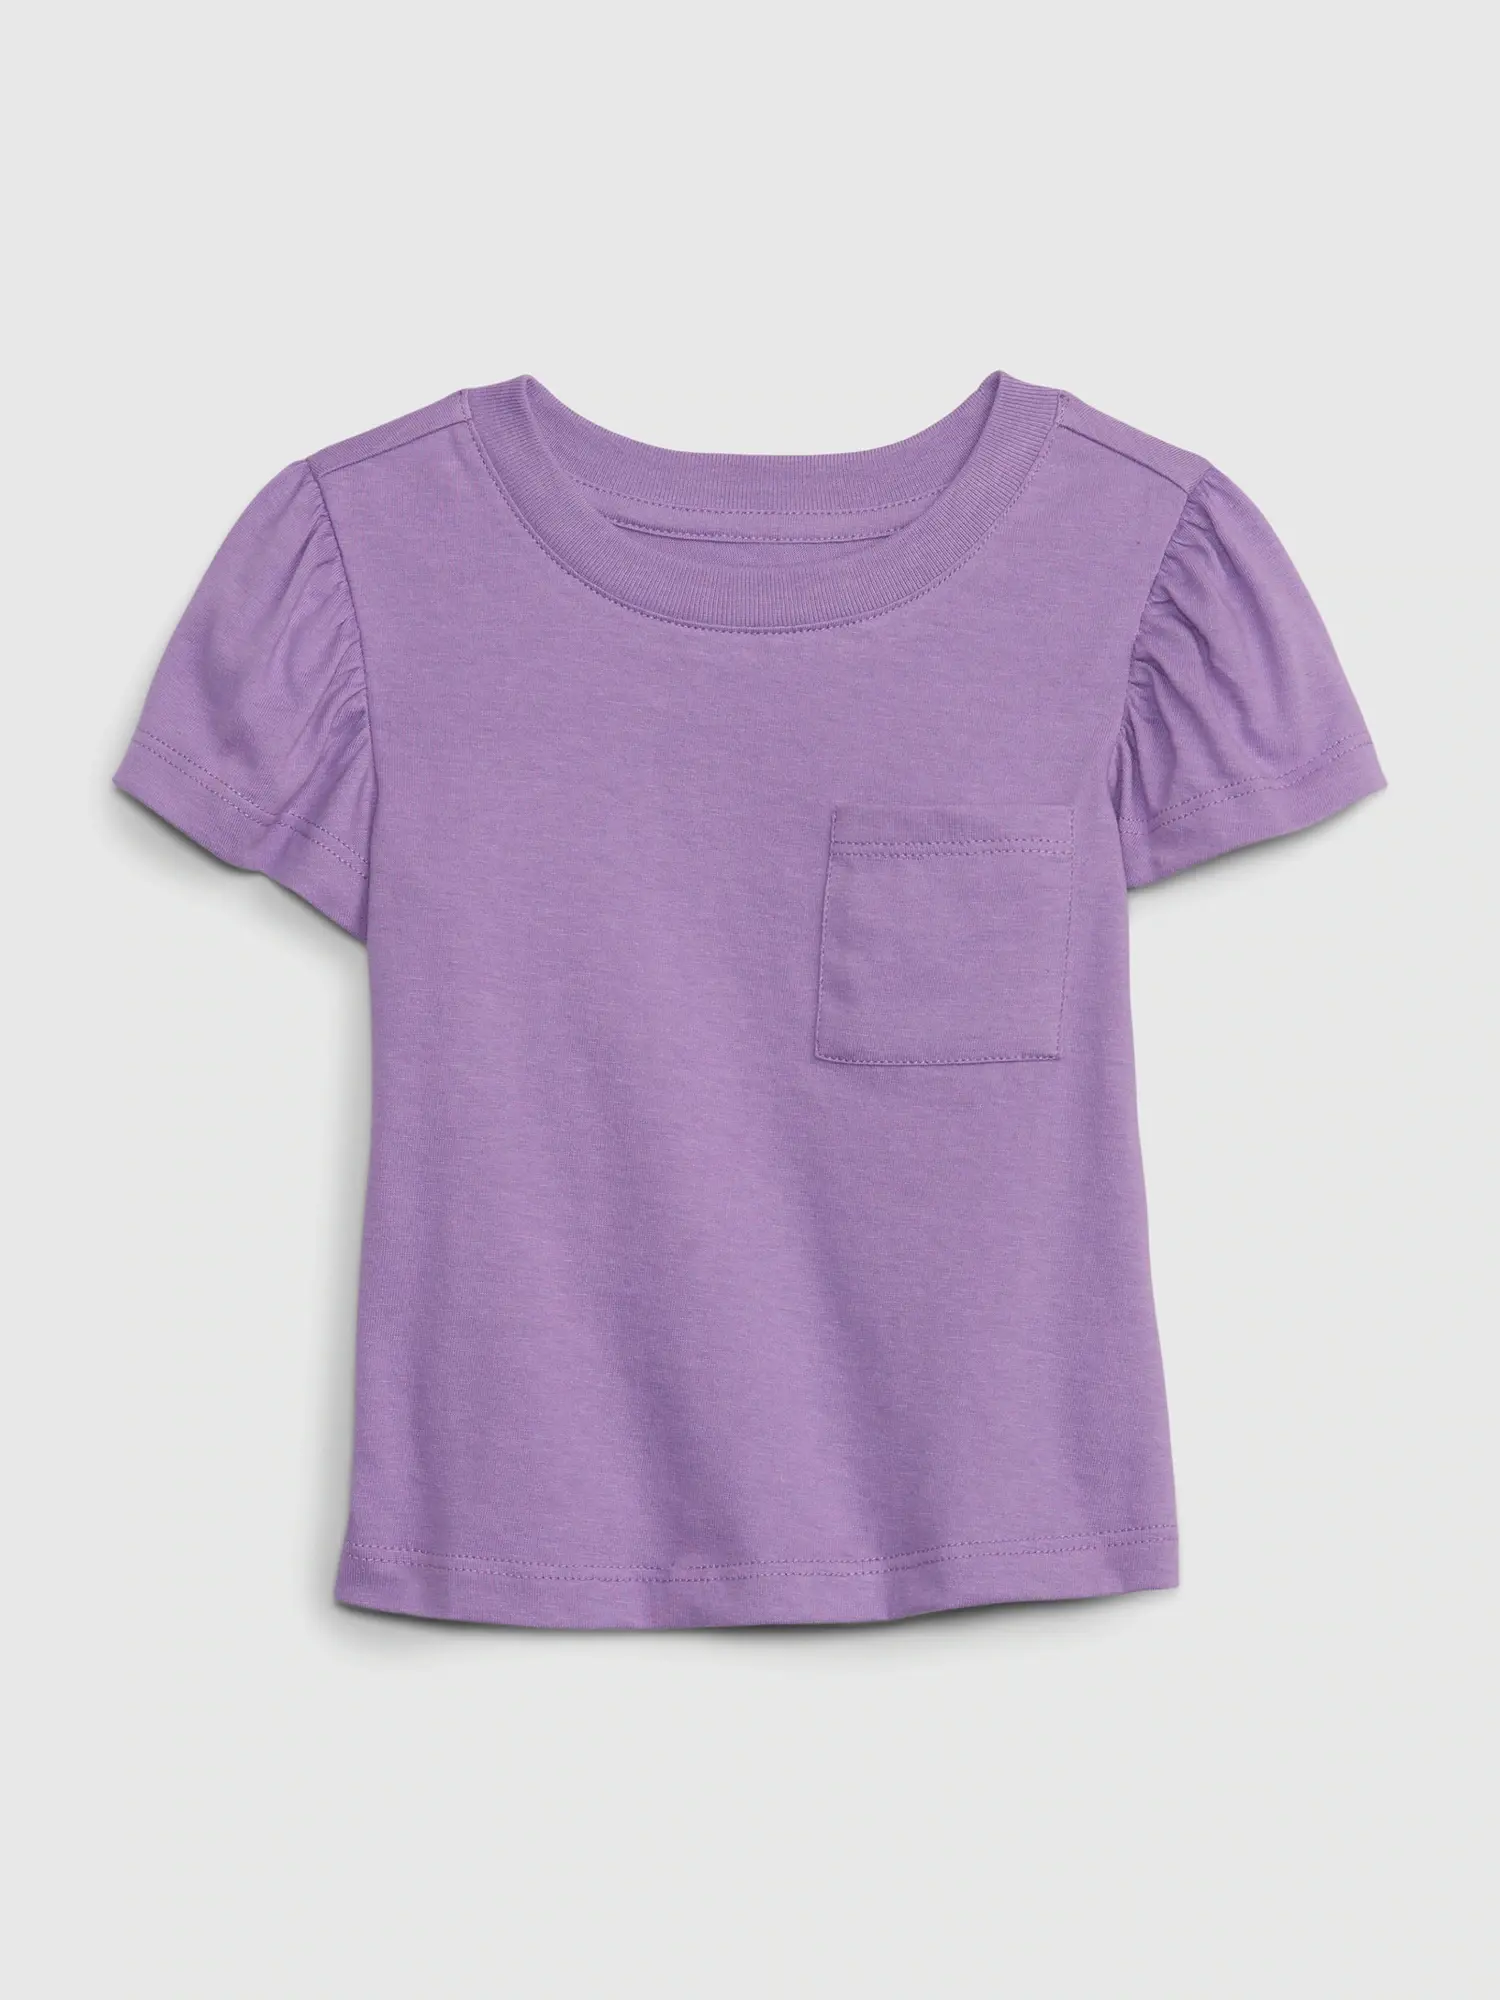 Gap Toddler 100% Organic Cotton Mix and Match Puff Sleeve T-Shirt purple. 1